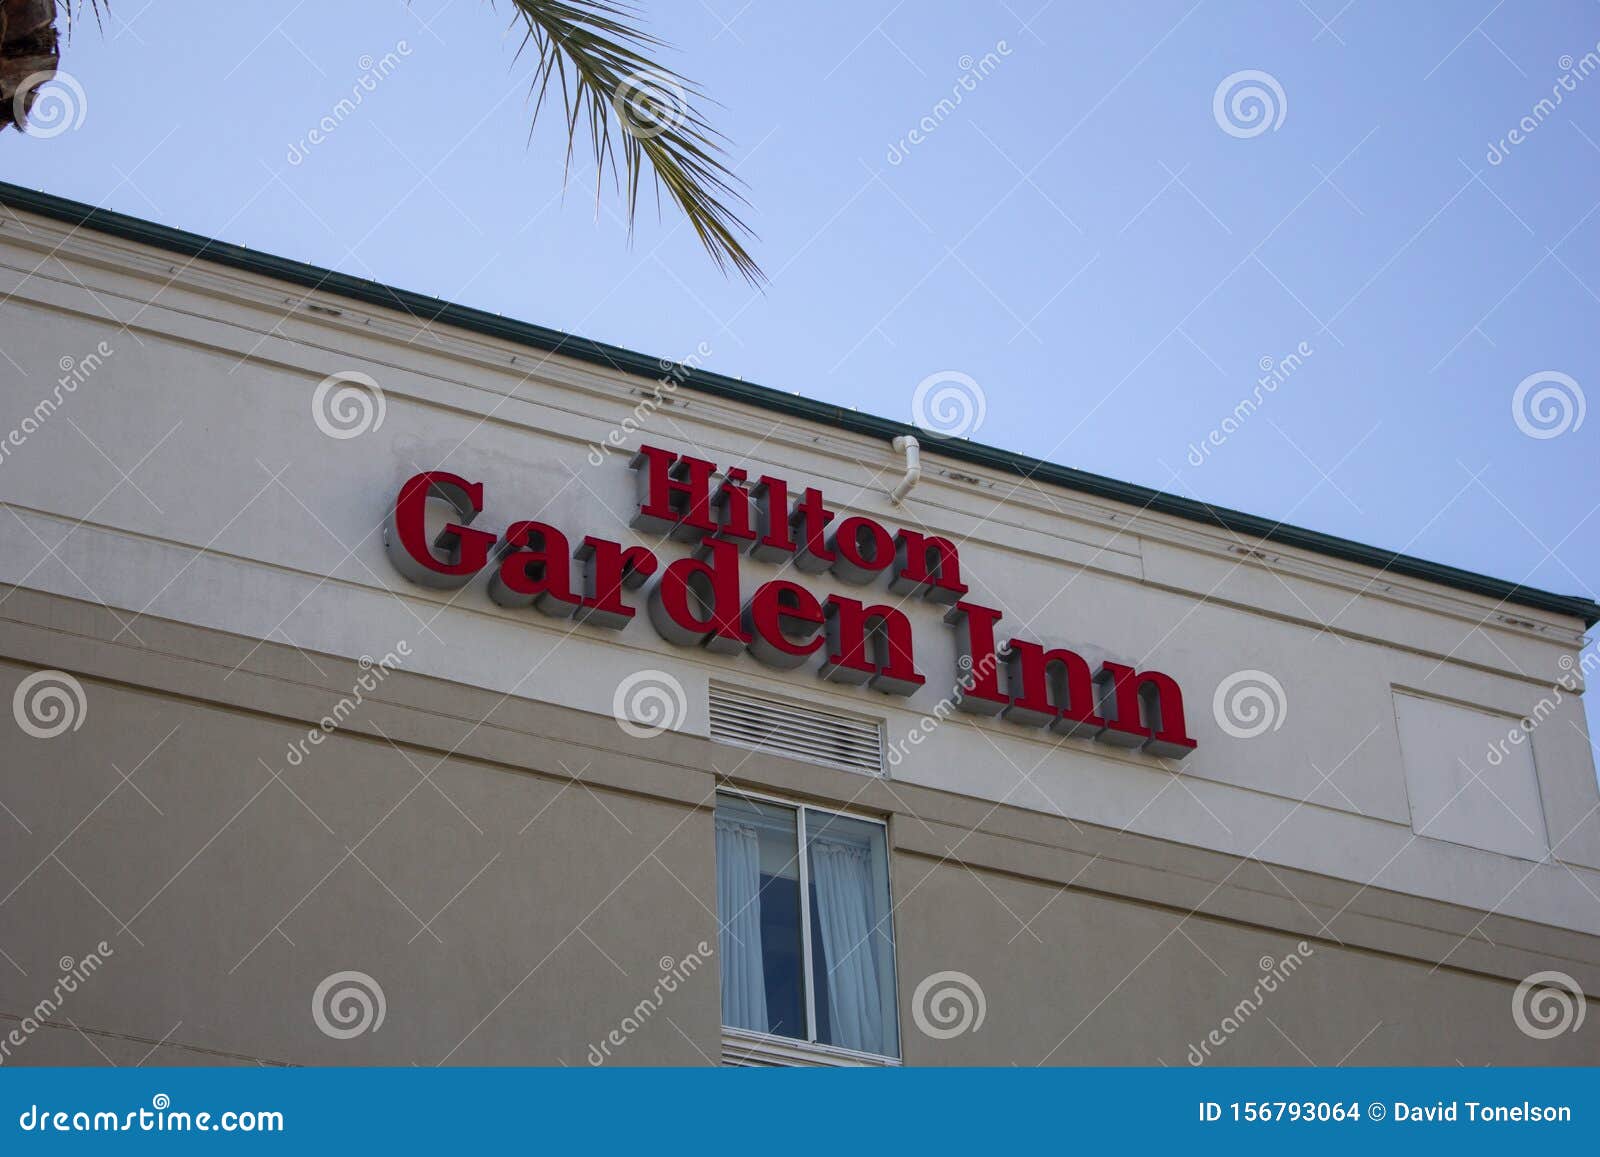 Hilton Garden Inn Hotel Sign Editorial Stock Image Image Of